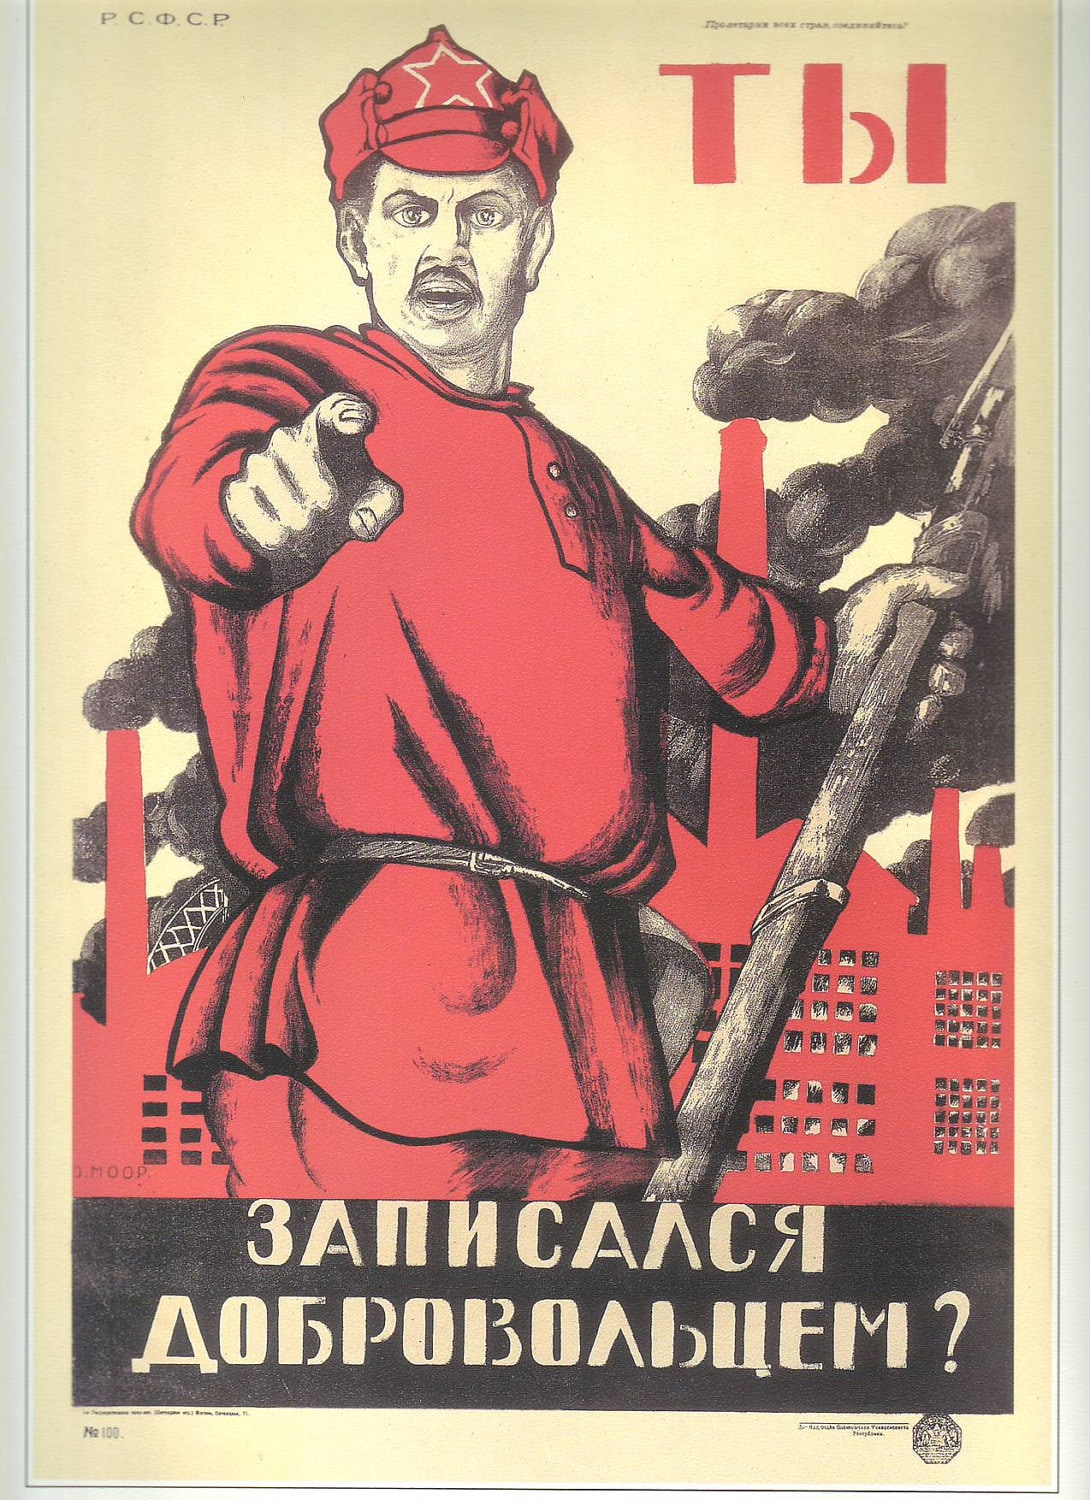 The Political Development Of The Soviet Union